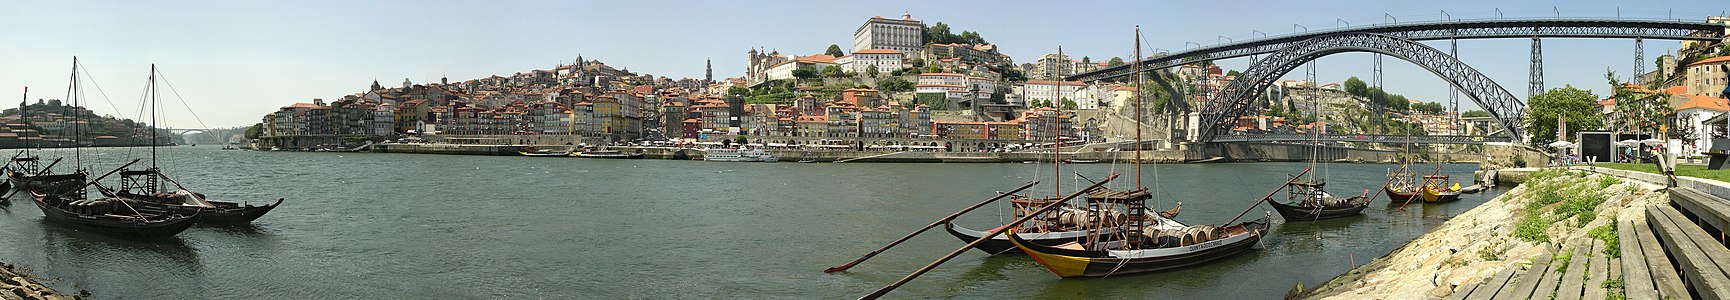 Porto ve Douro Nehri'nin Vila Nova de Gaia'dan görünümü. (Üreten: Olegivvit)